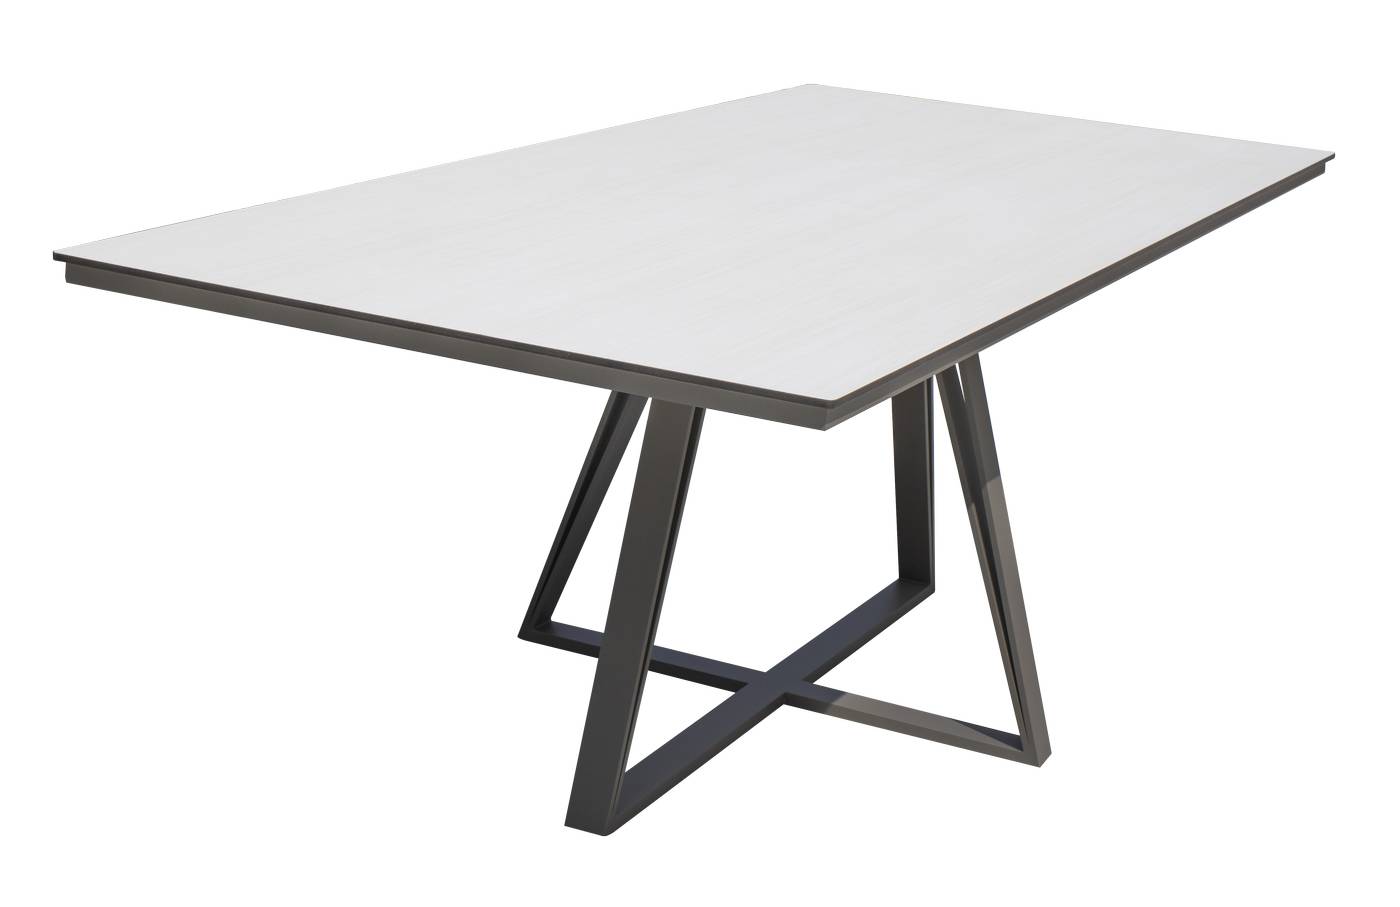 Mesa de aluminio con tablero lamas de aluminio o HPL de 180 o 220 cm. Disponible en varios colores.